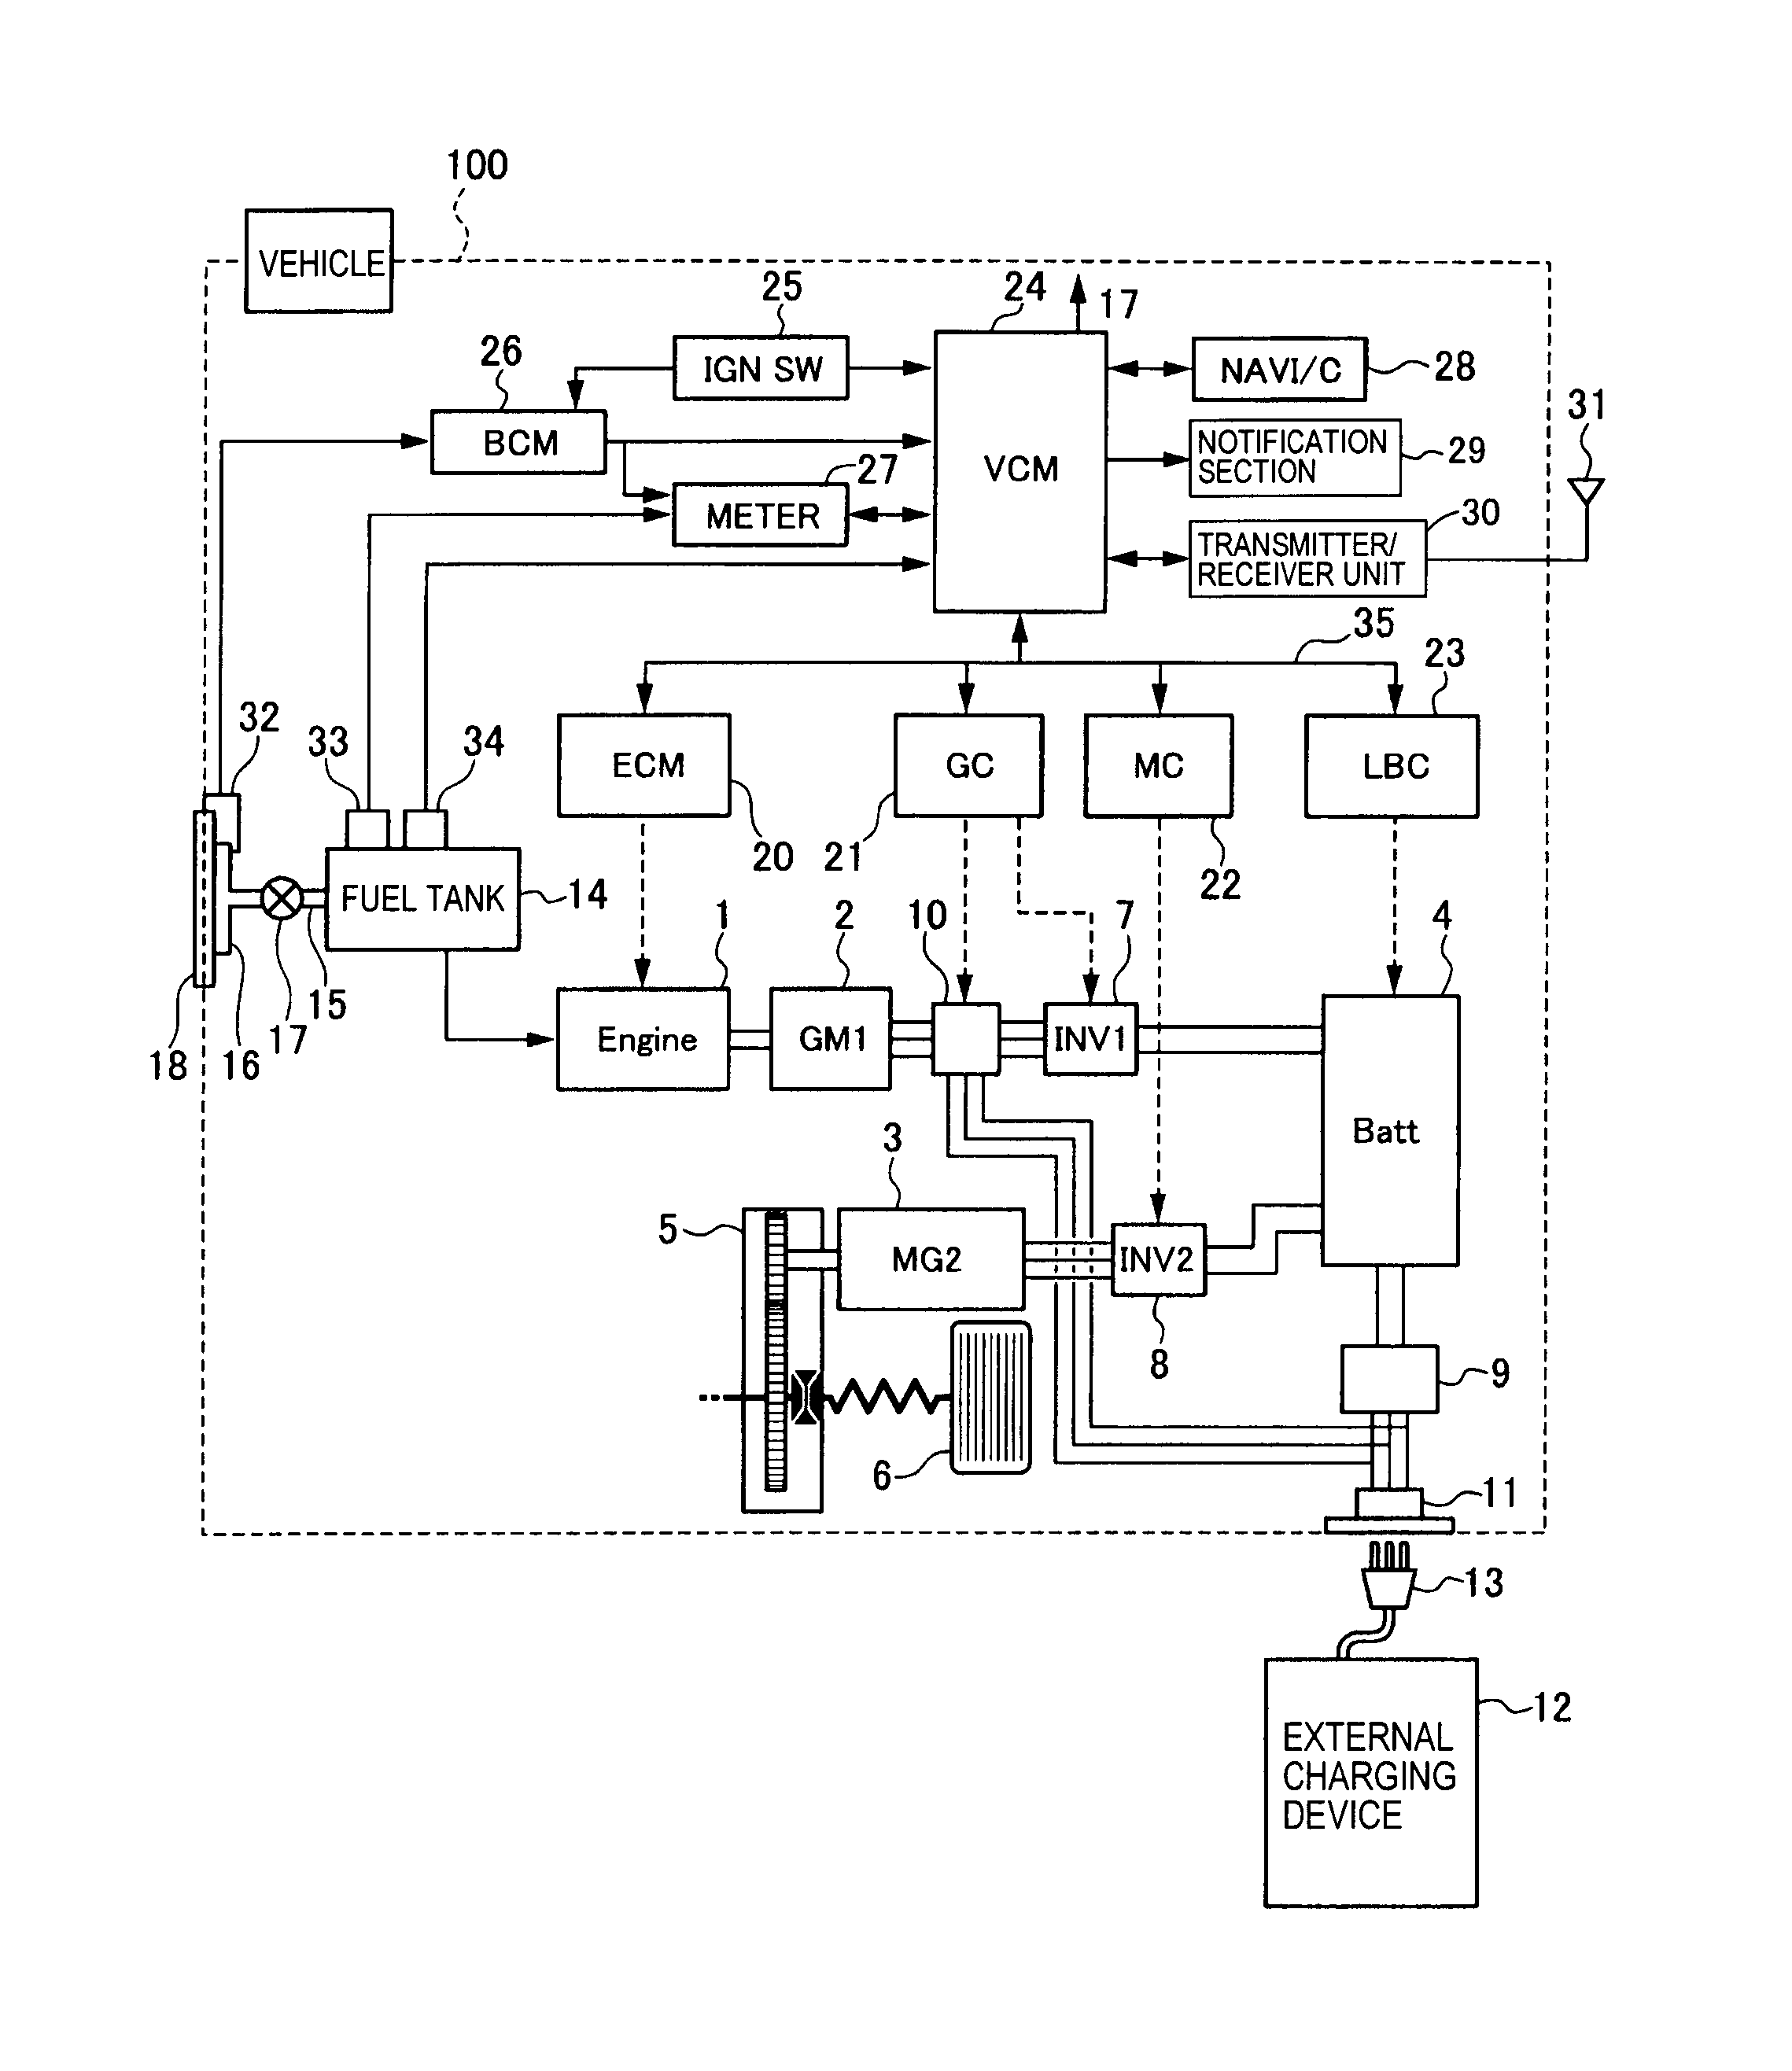 vertical redraw of wiring diagram